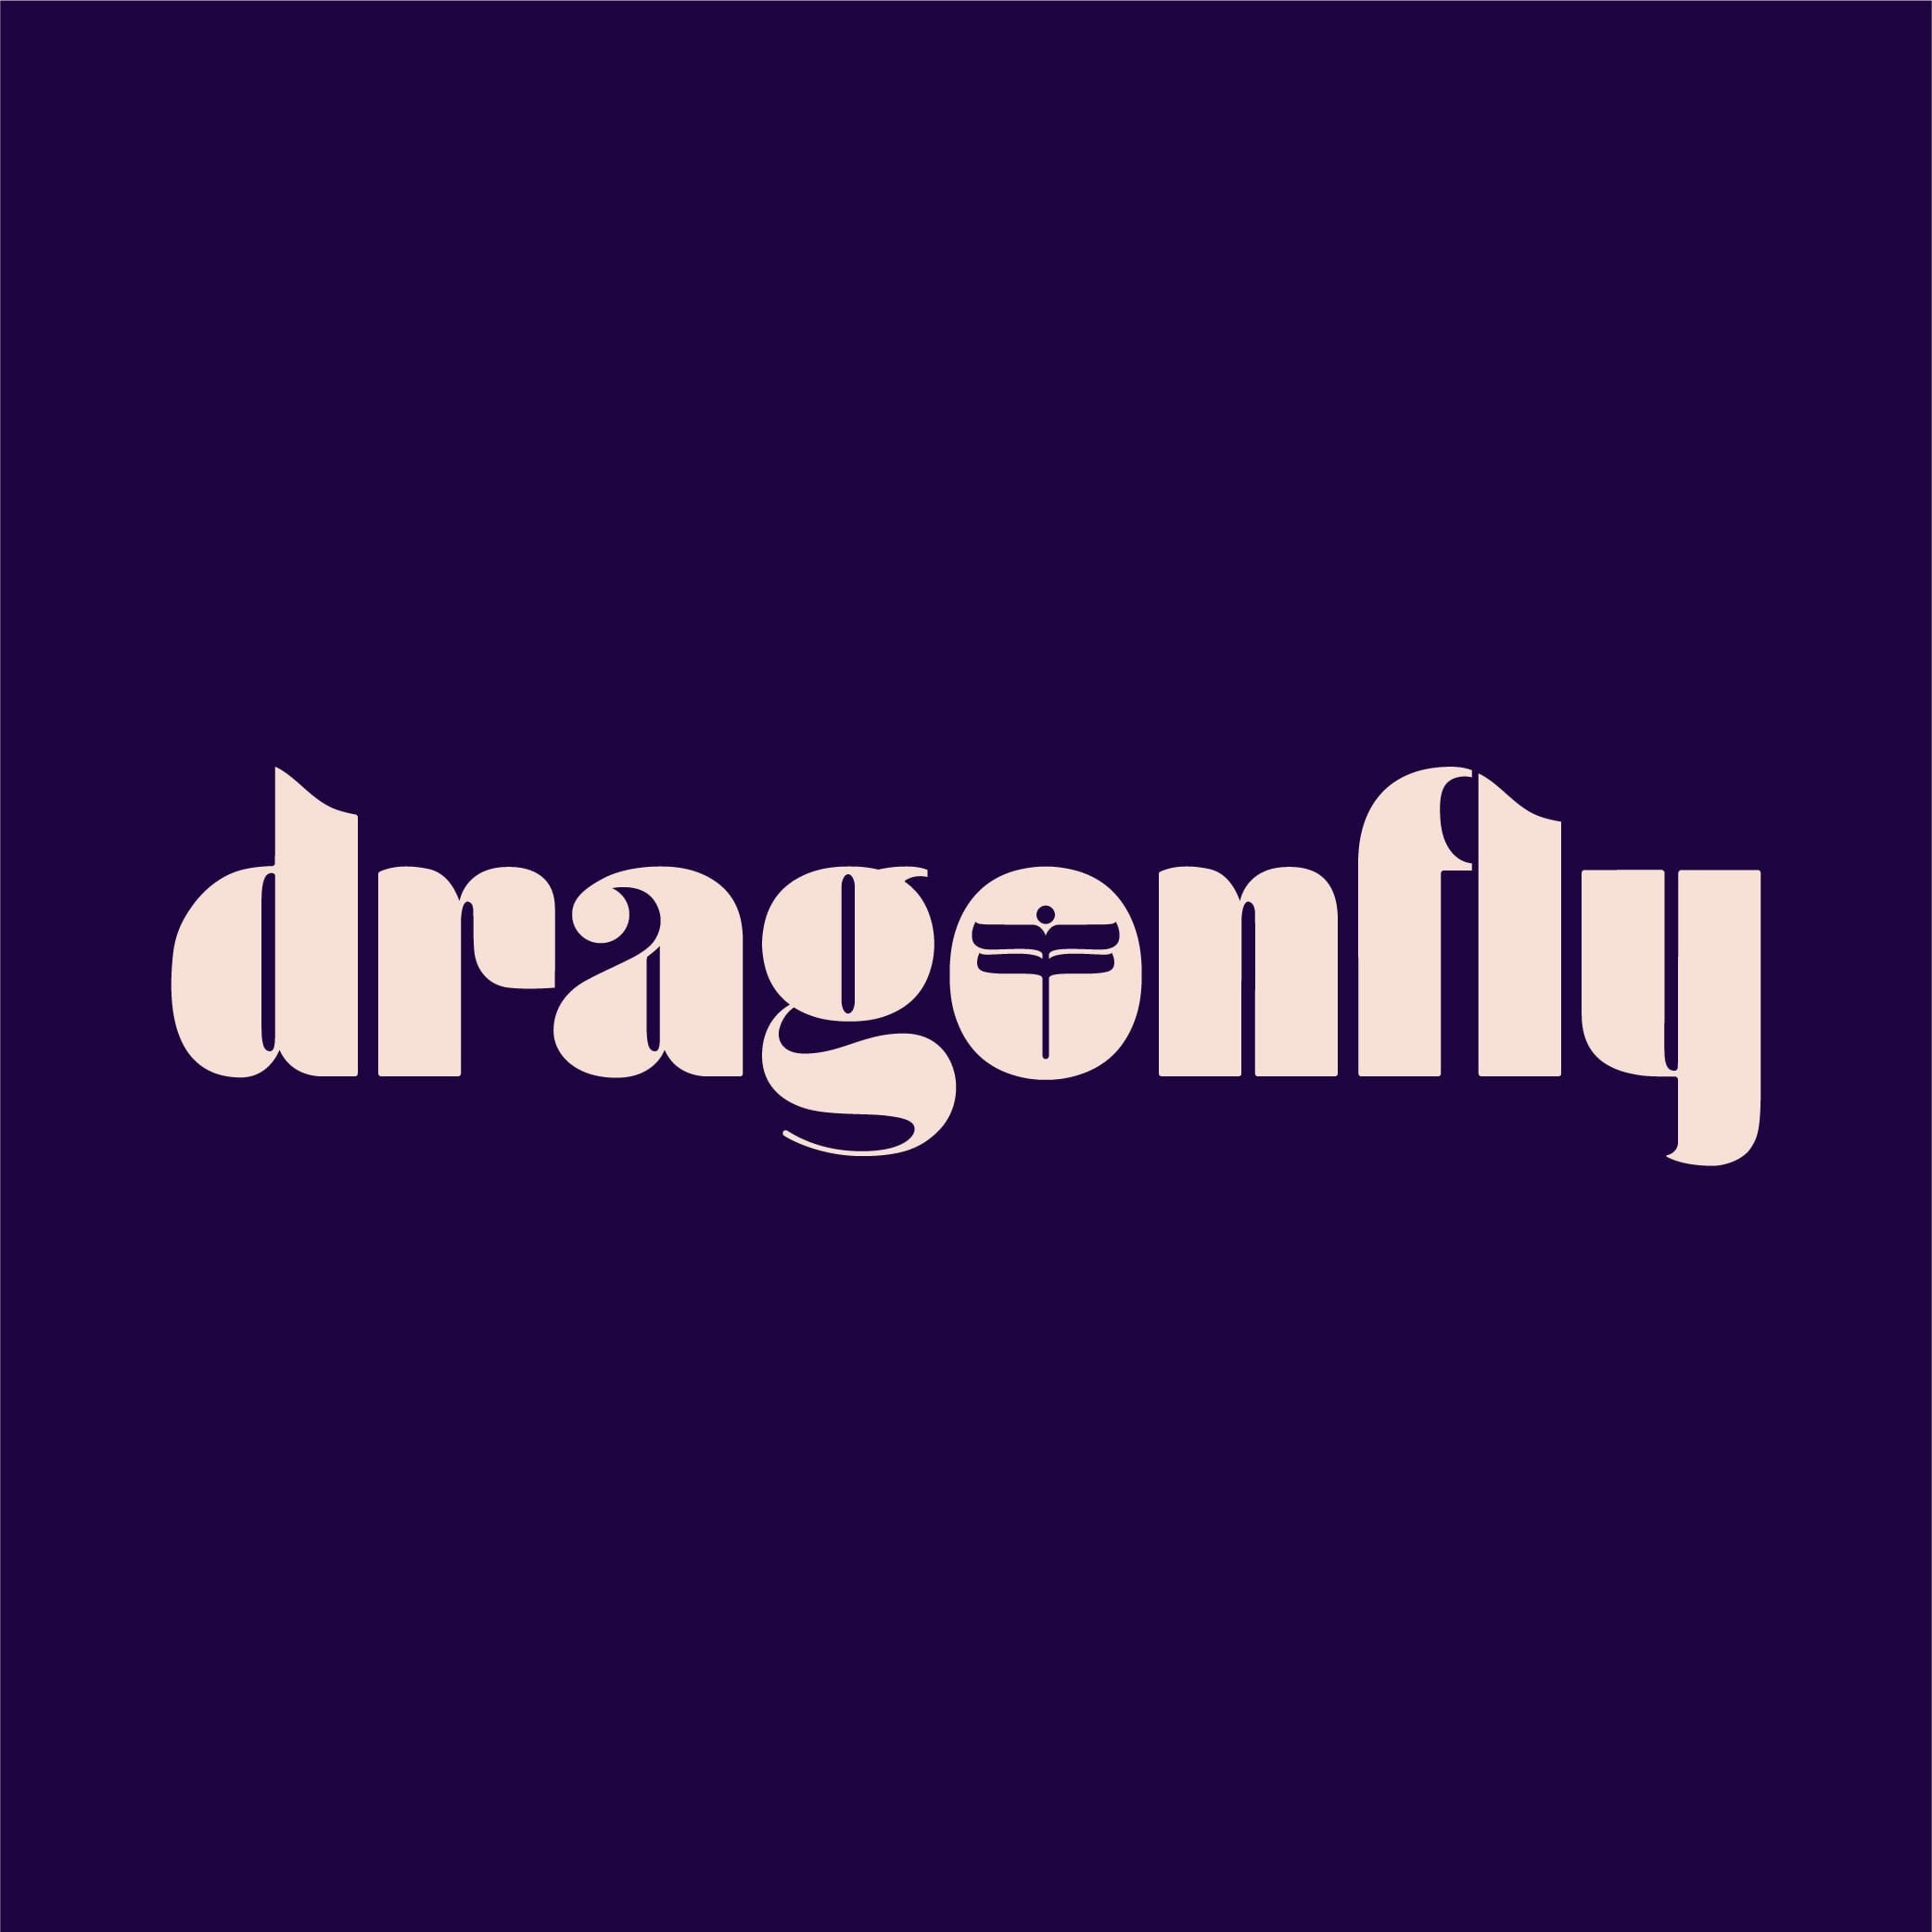 DF_logotype_dragonfly_1 copy.jpg